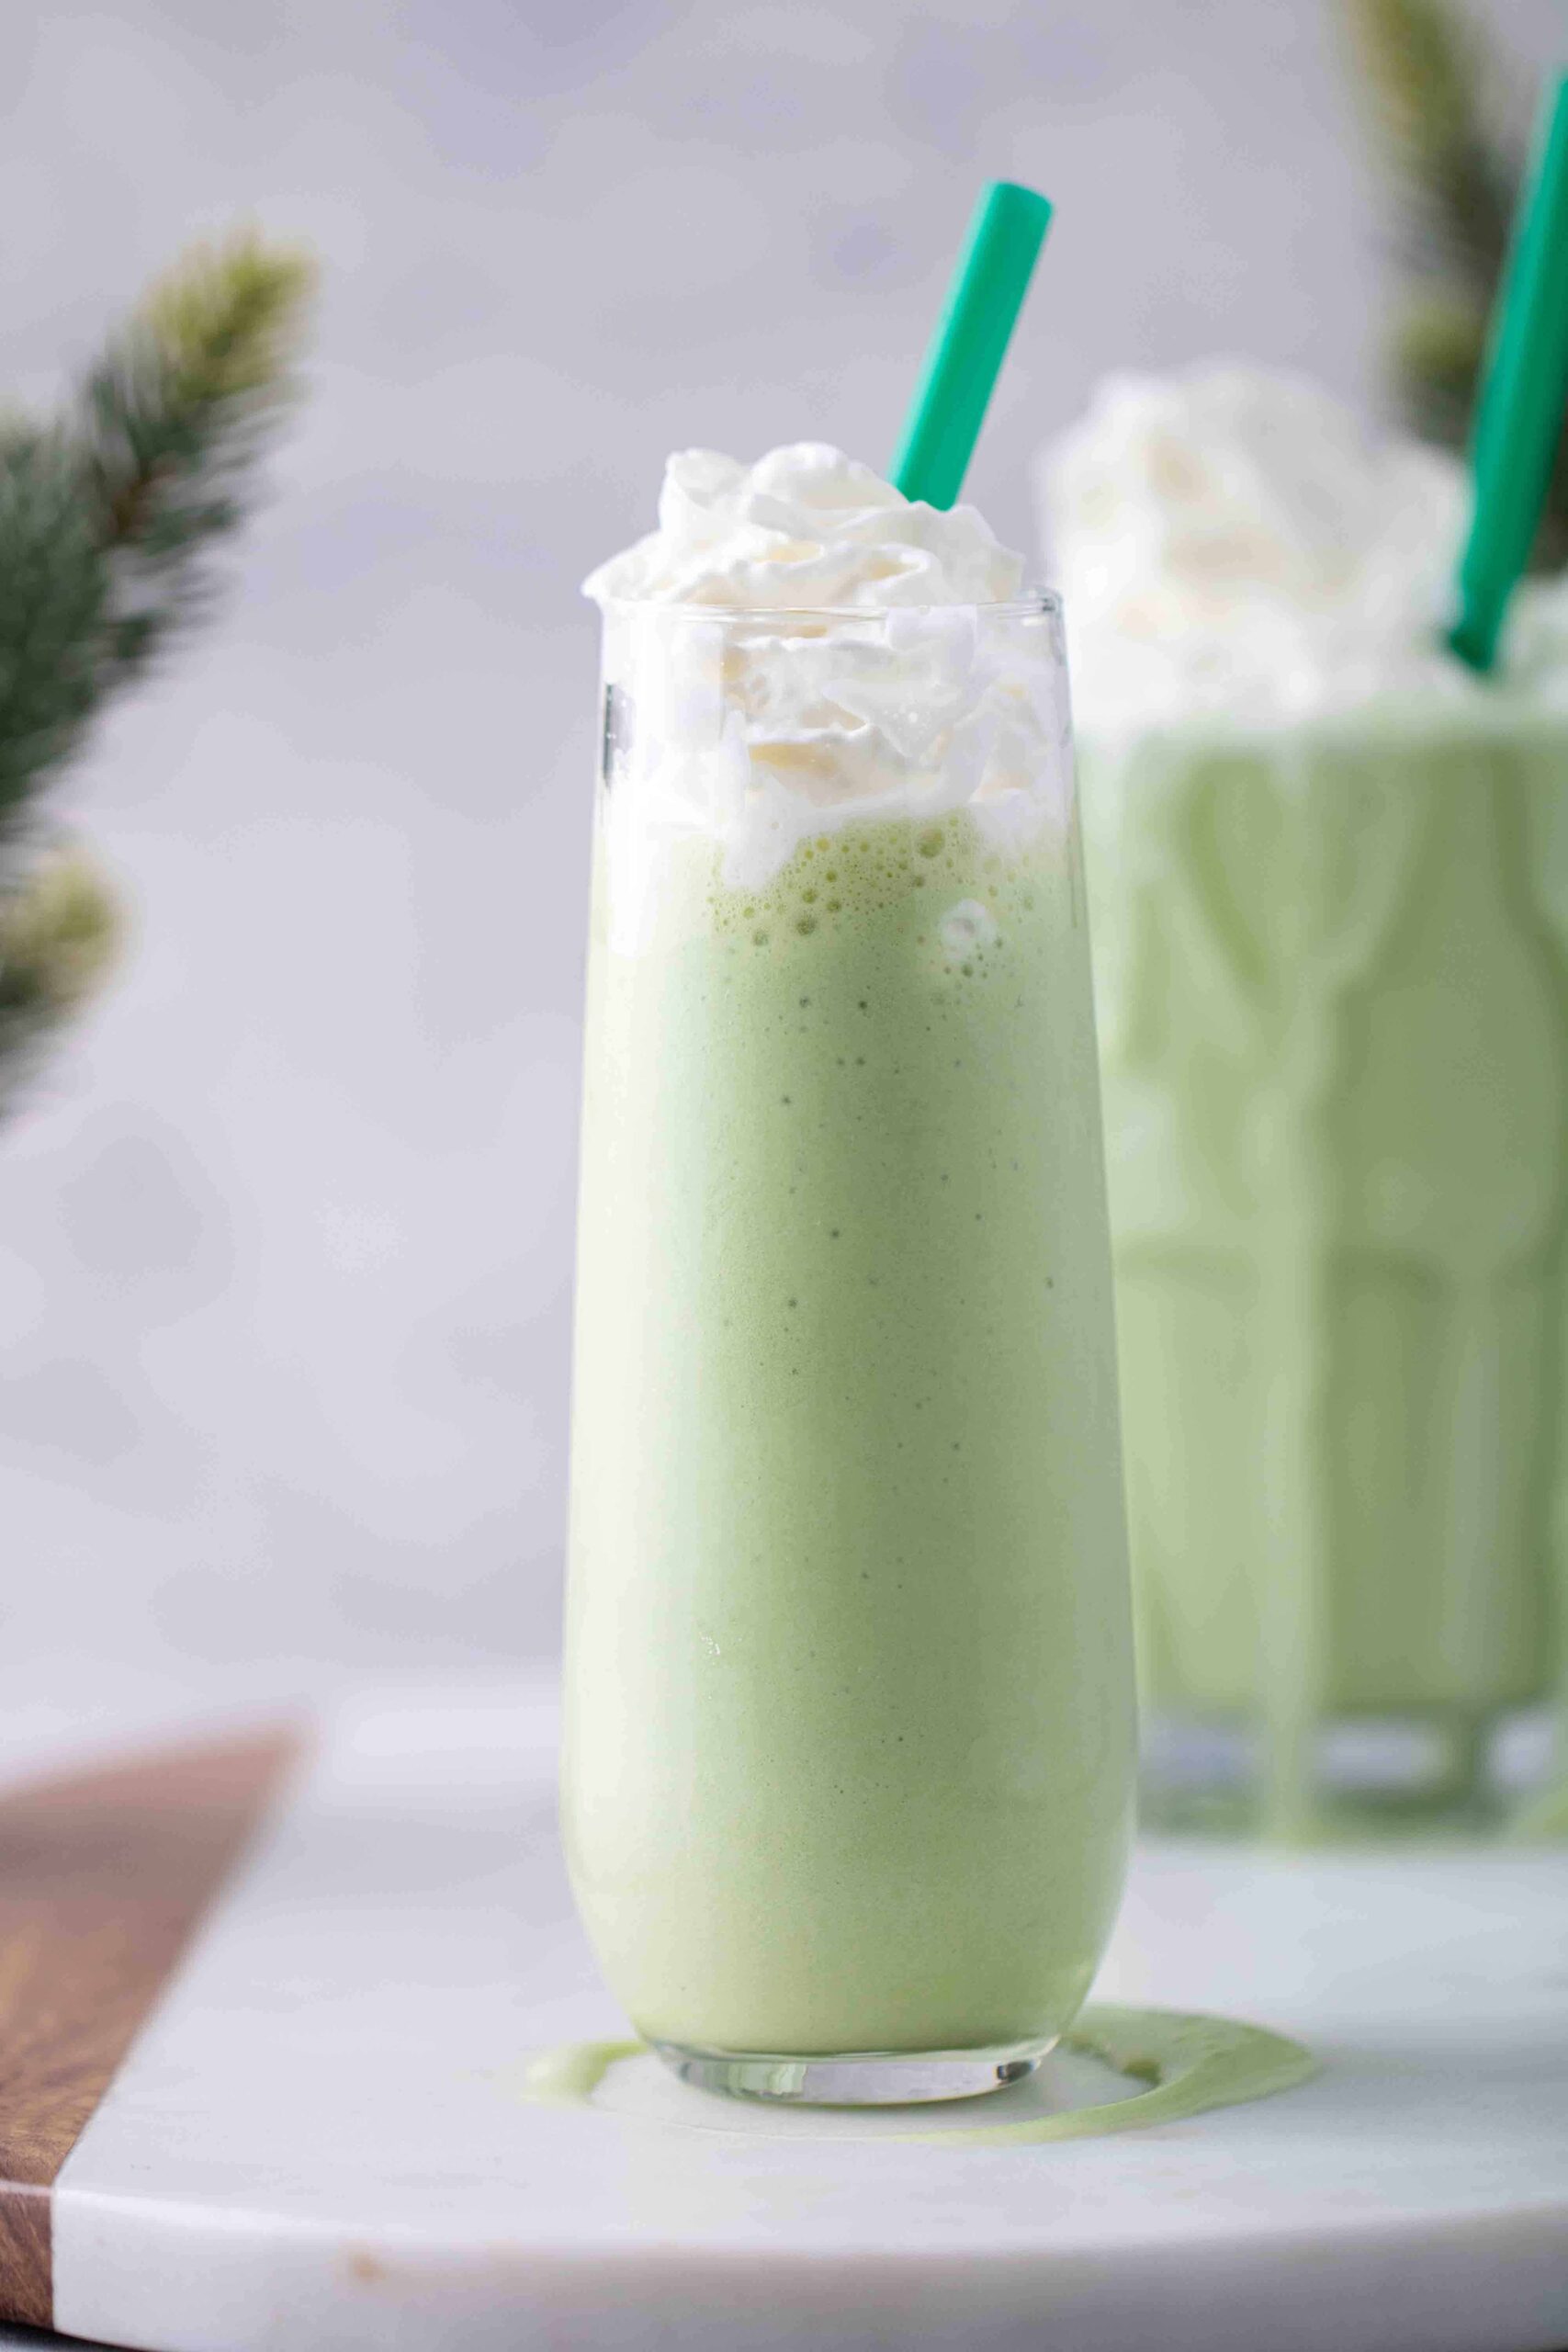 https://lifestyleofafoodie.com/wp-content/uploads/2021/01/Copycat-Starbucks-Matcha-Green-Tea-frappuccino-13-of-15-scaled.jpg